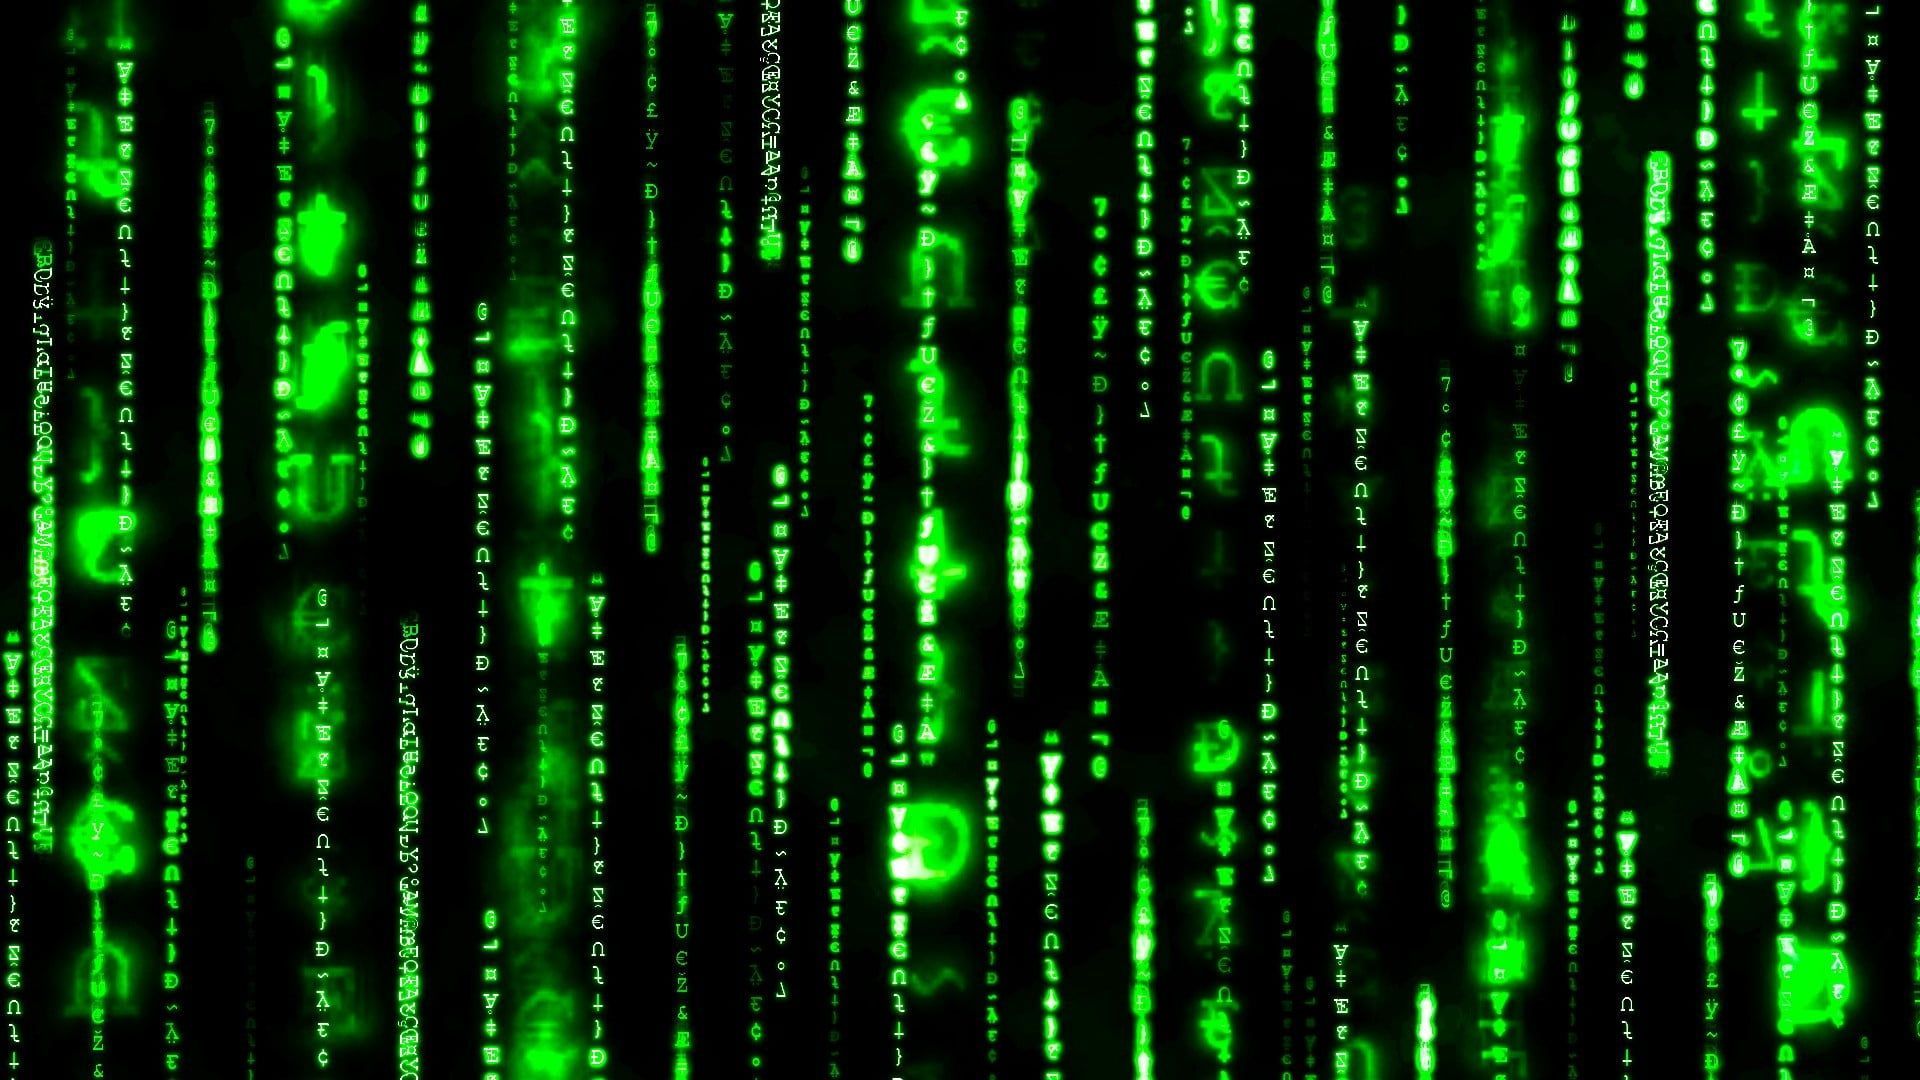 green and black matrix wallpaper #technology The Matrix #movies P # wallpaper #hdwallpaper. Matrix wallpaper, Computer wallpaper hd, Animated wallpaper iphone